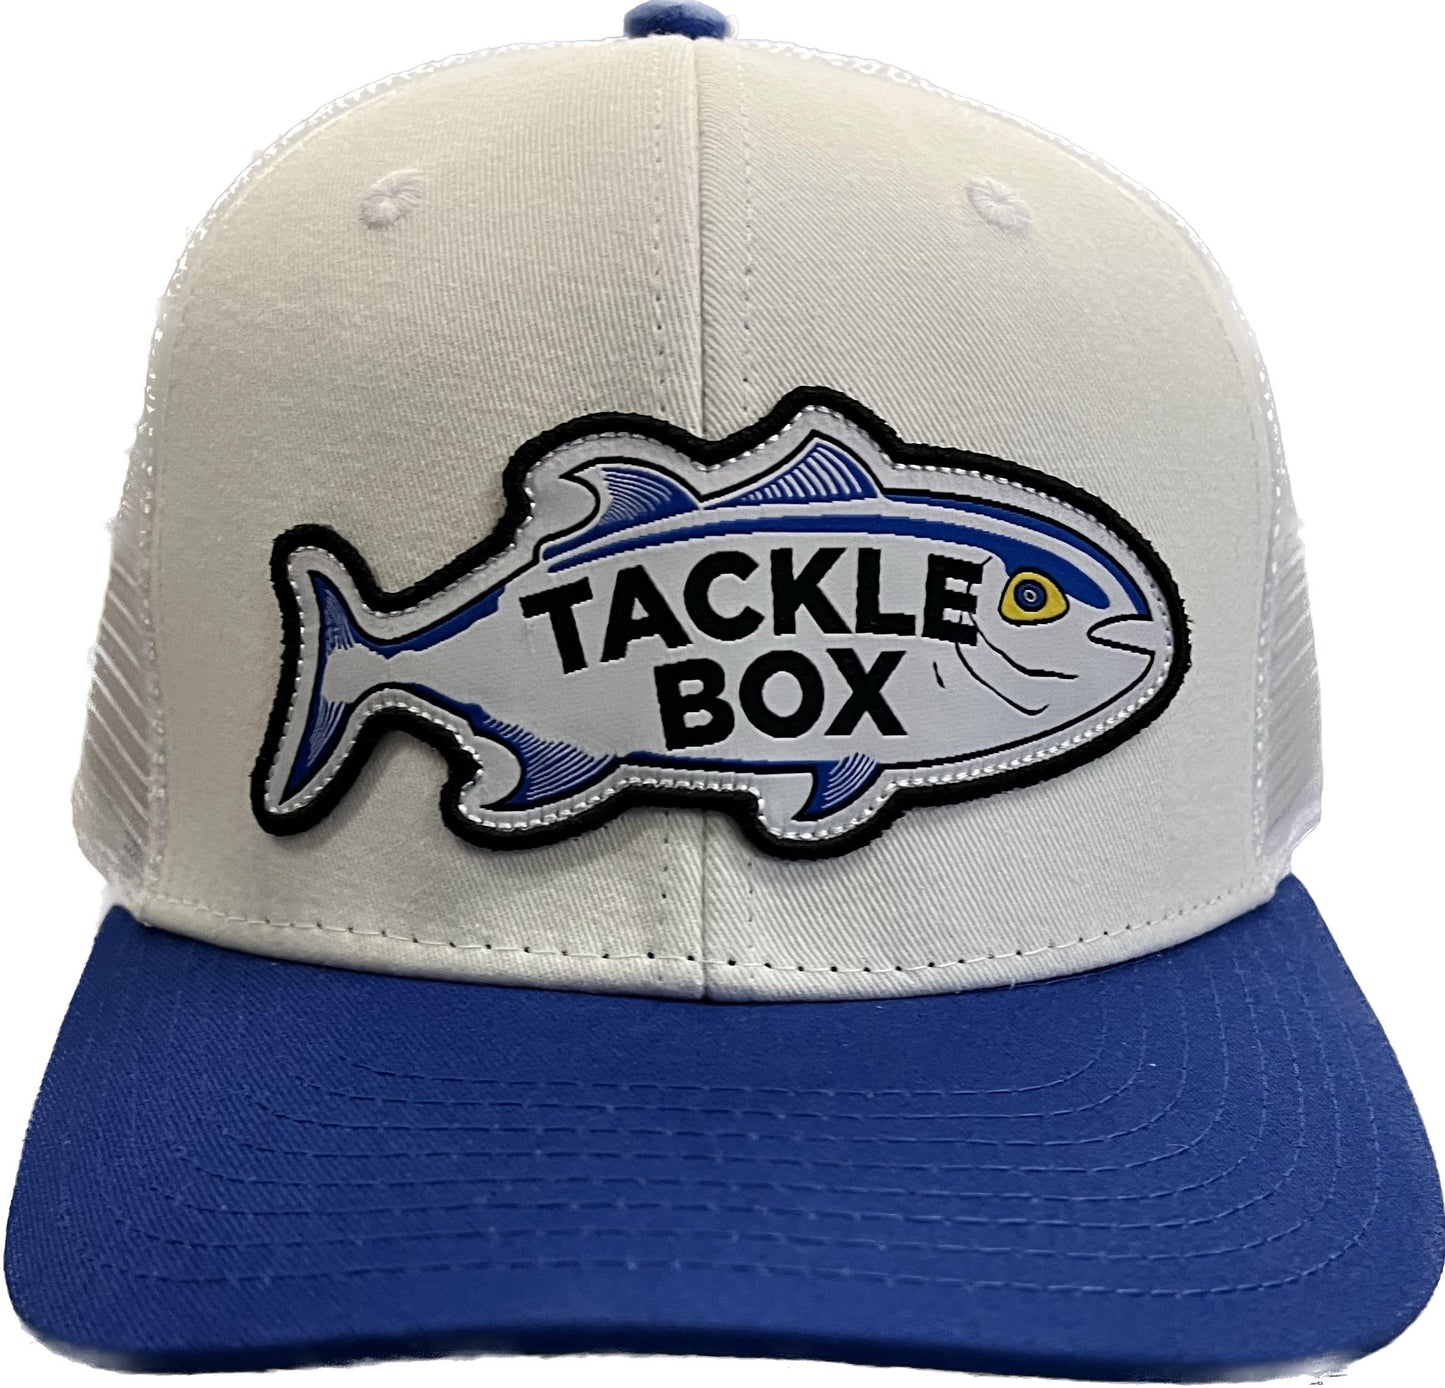 Tackle Box Retro Fish Hat - Royal Blue / White